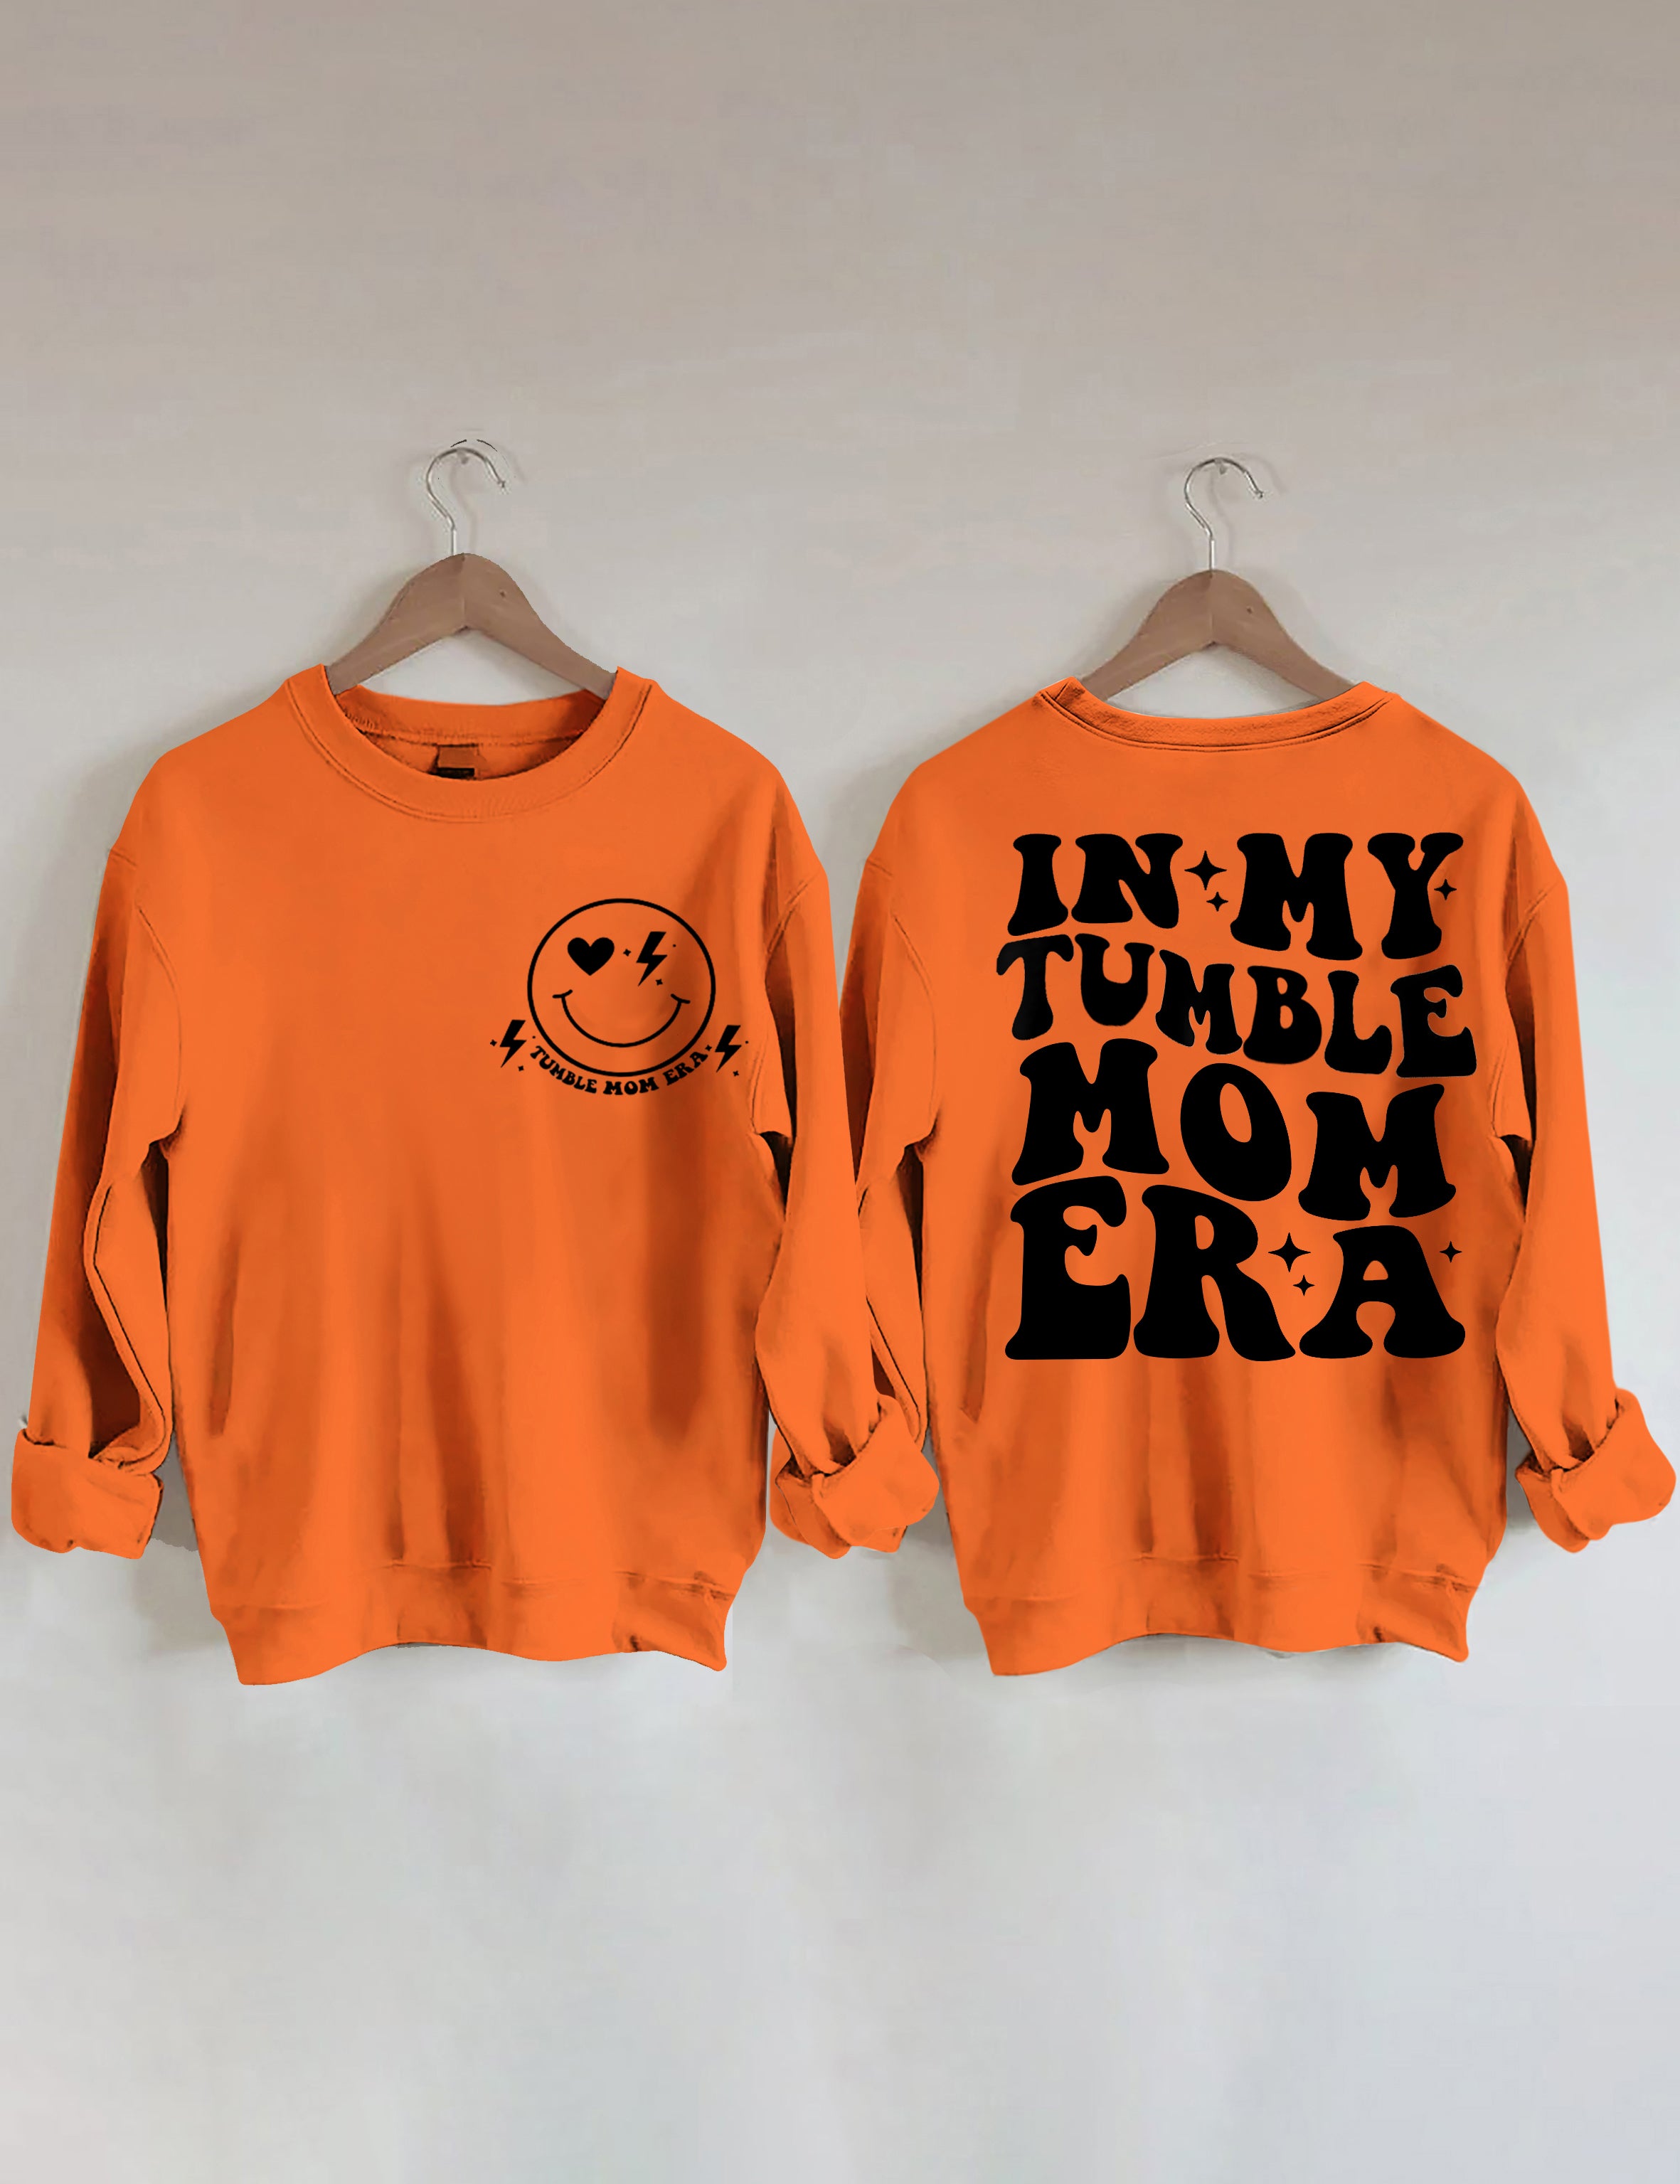 In My Tumble Mom Era Sweatshirt